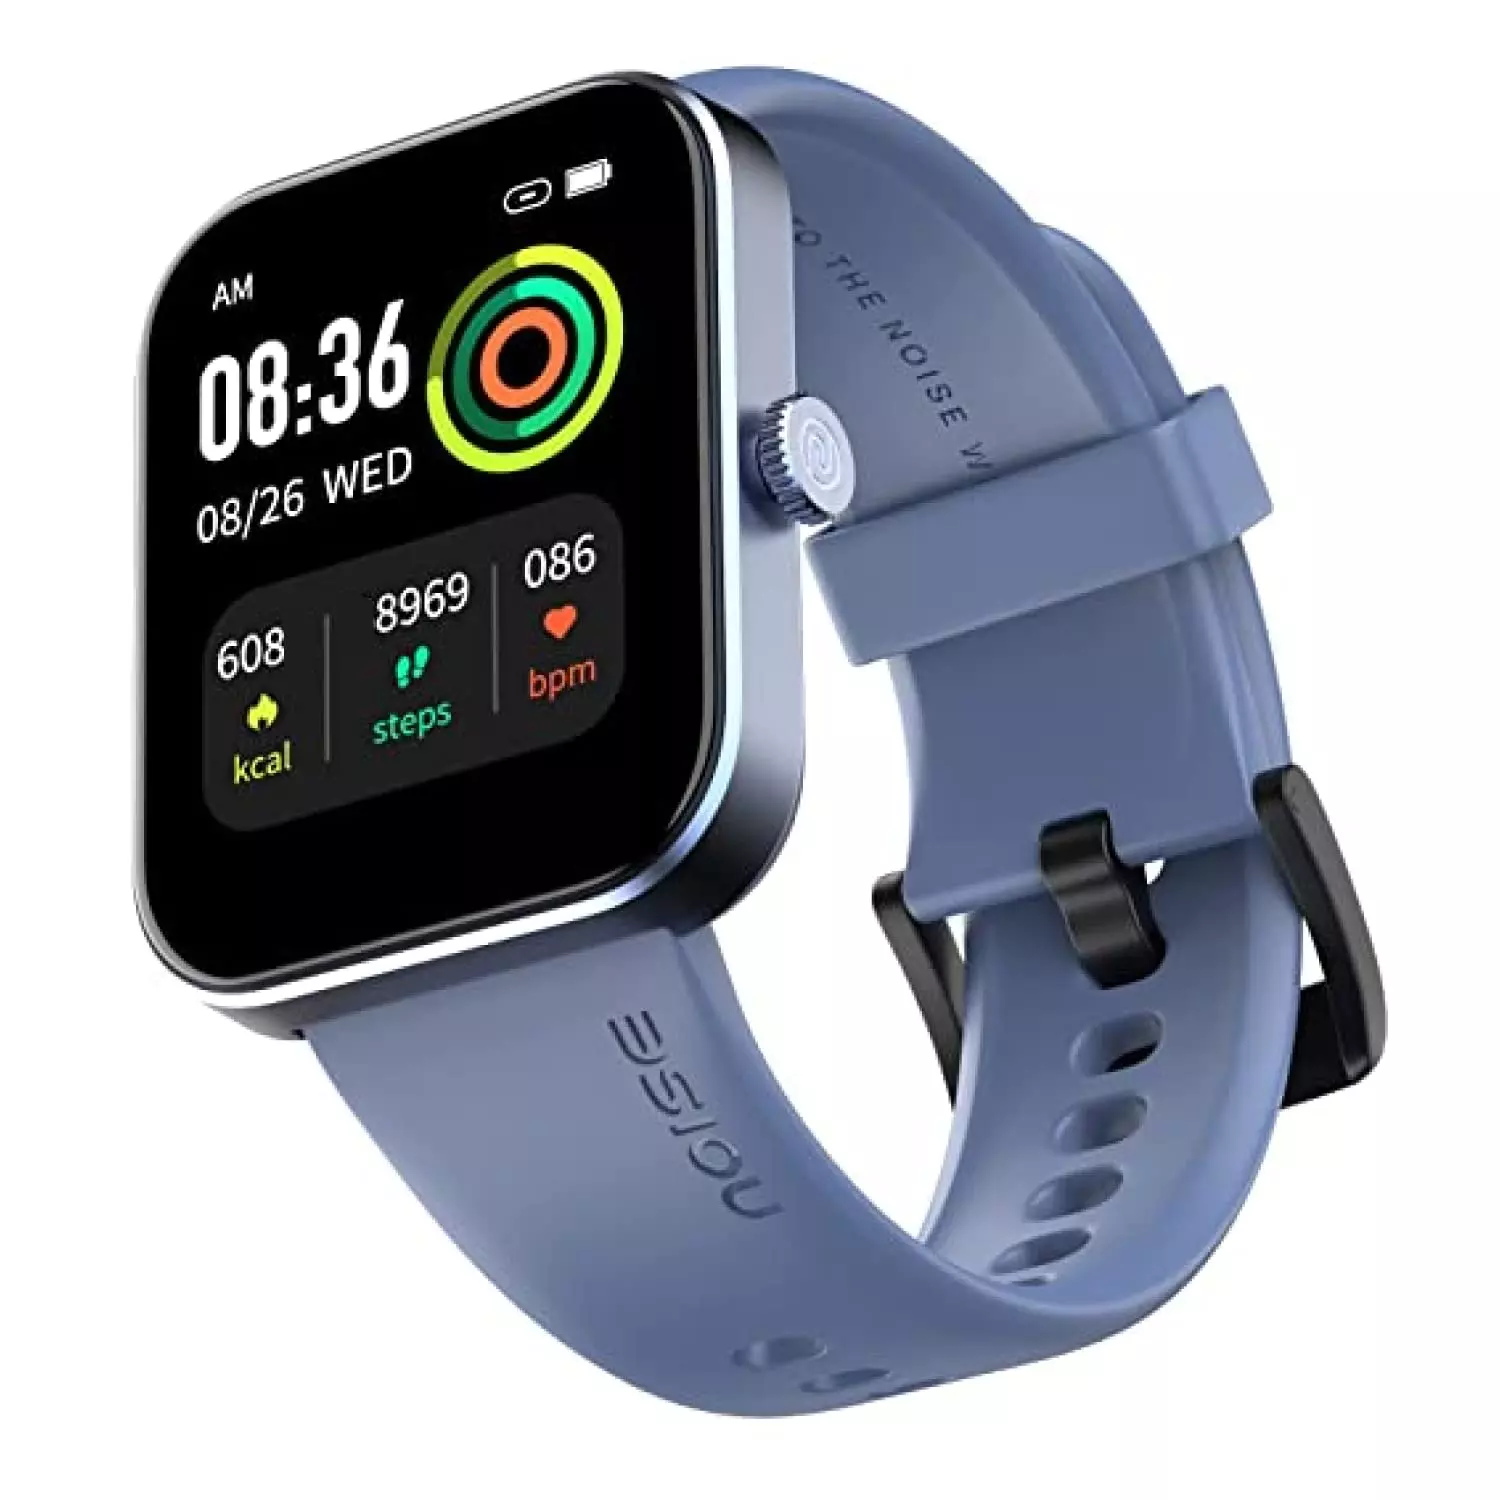 Pulse Grand Smart Watch Price: